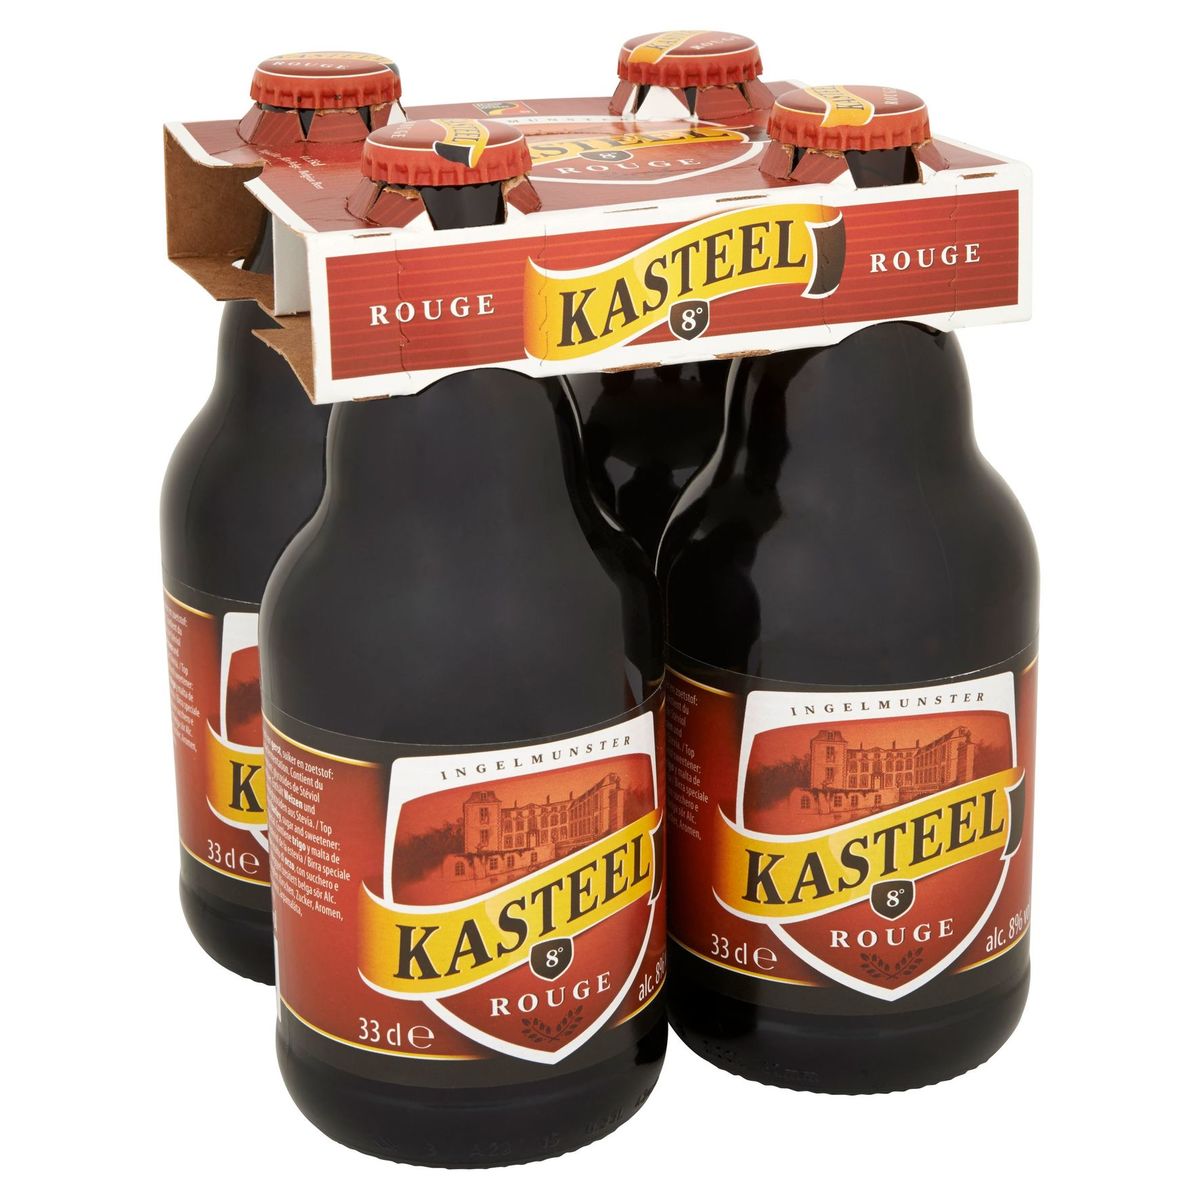 Kasteel 8° Rouge Bière Belge Bouteille 4 x 33 cl